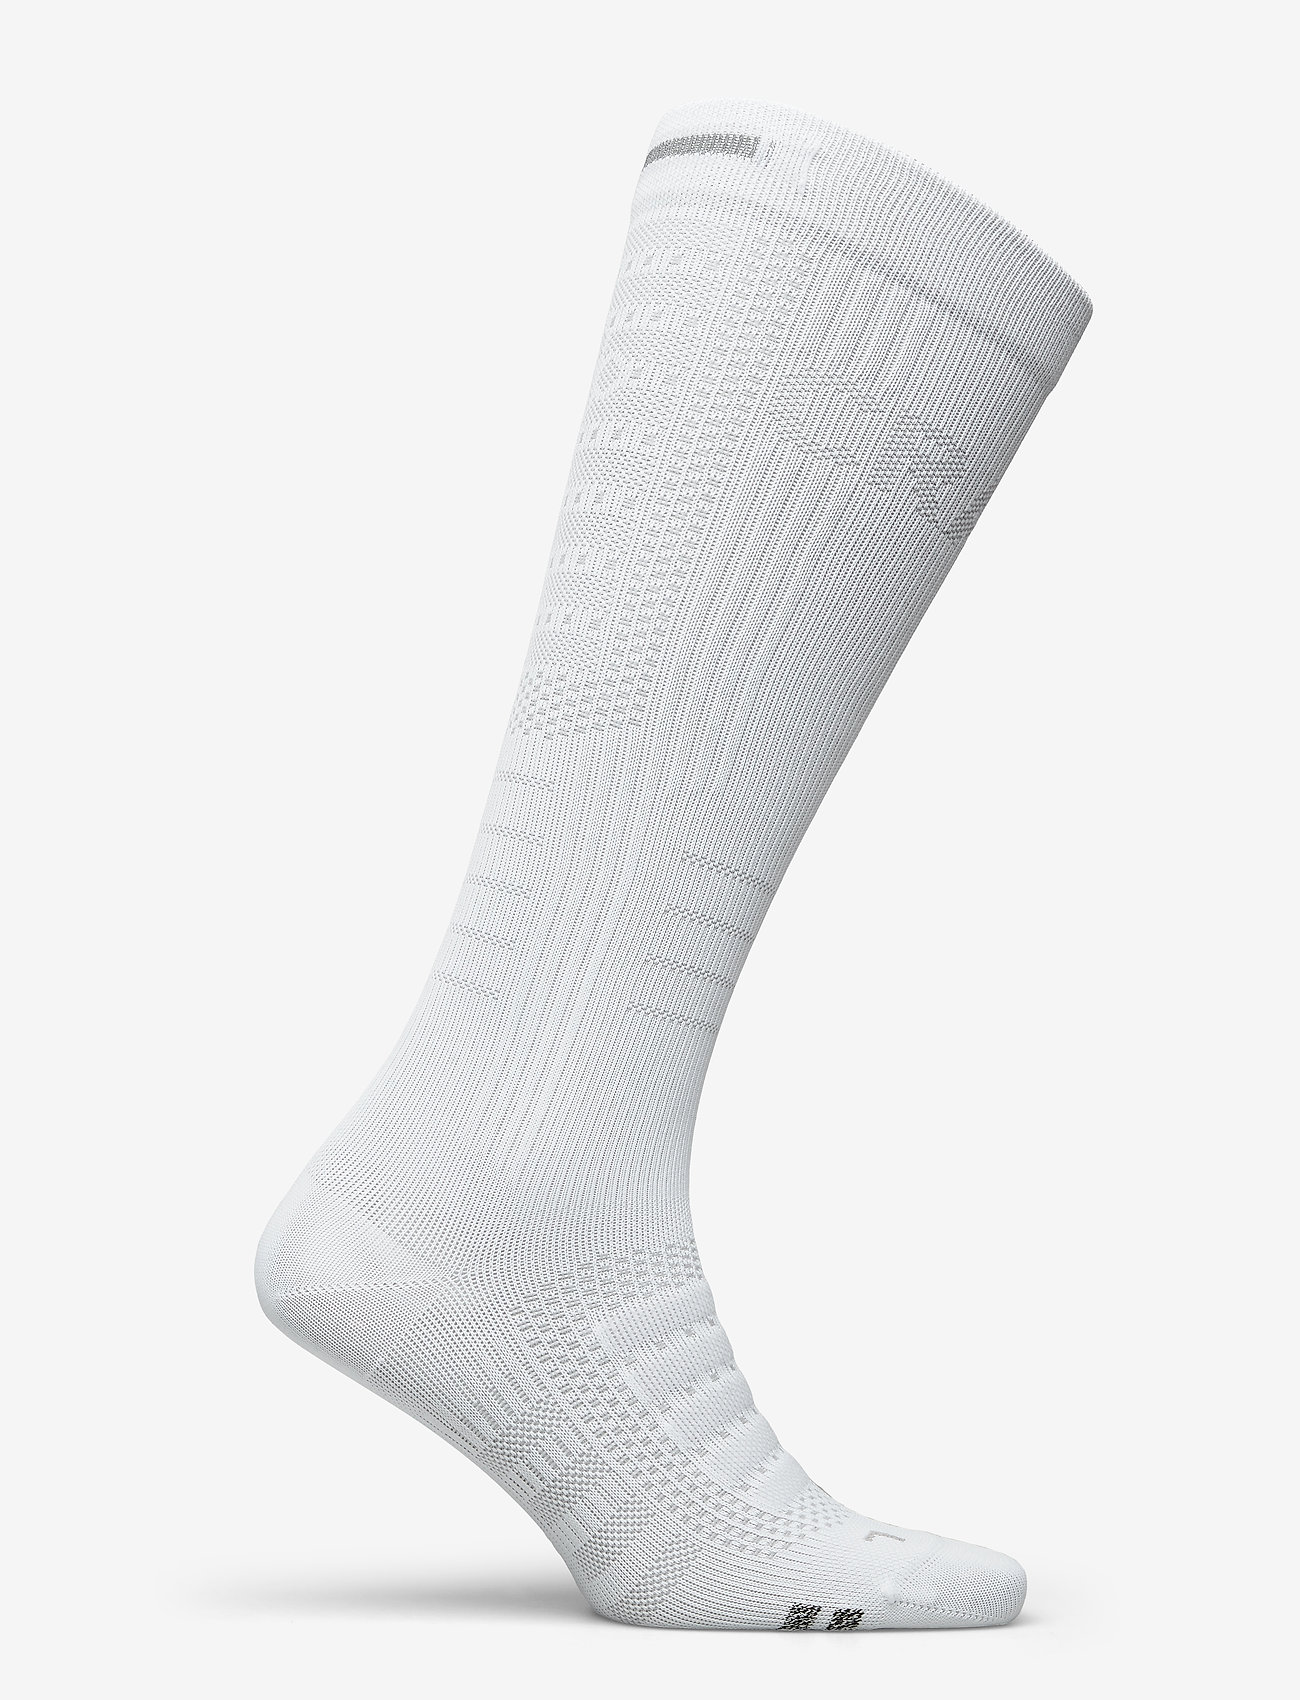 Craft - Adv Dry Compression Sock - juoksuvarusteet - white - 1